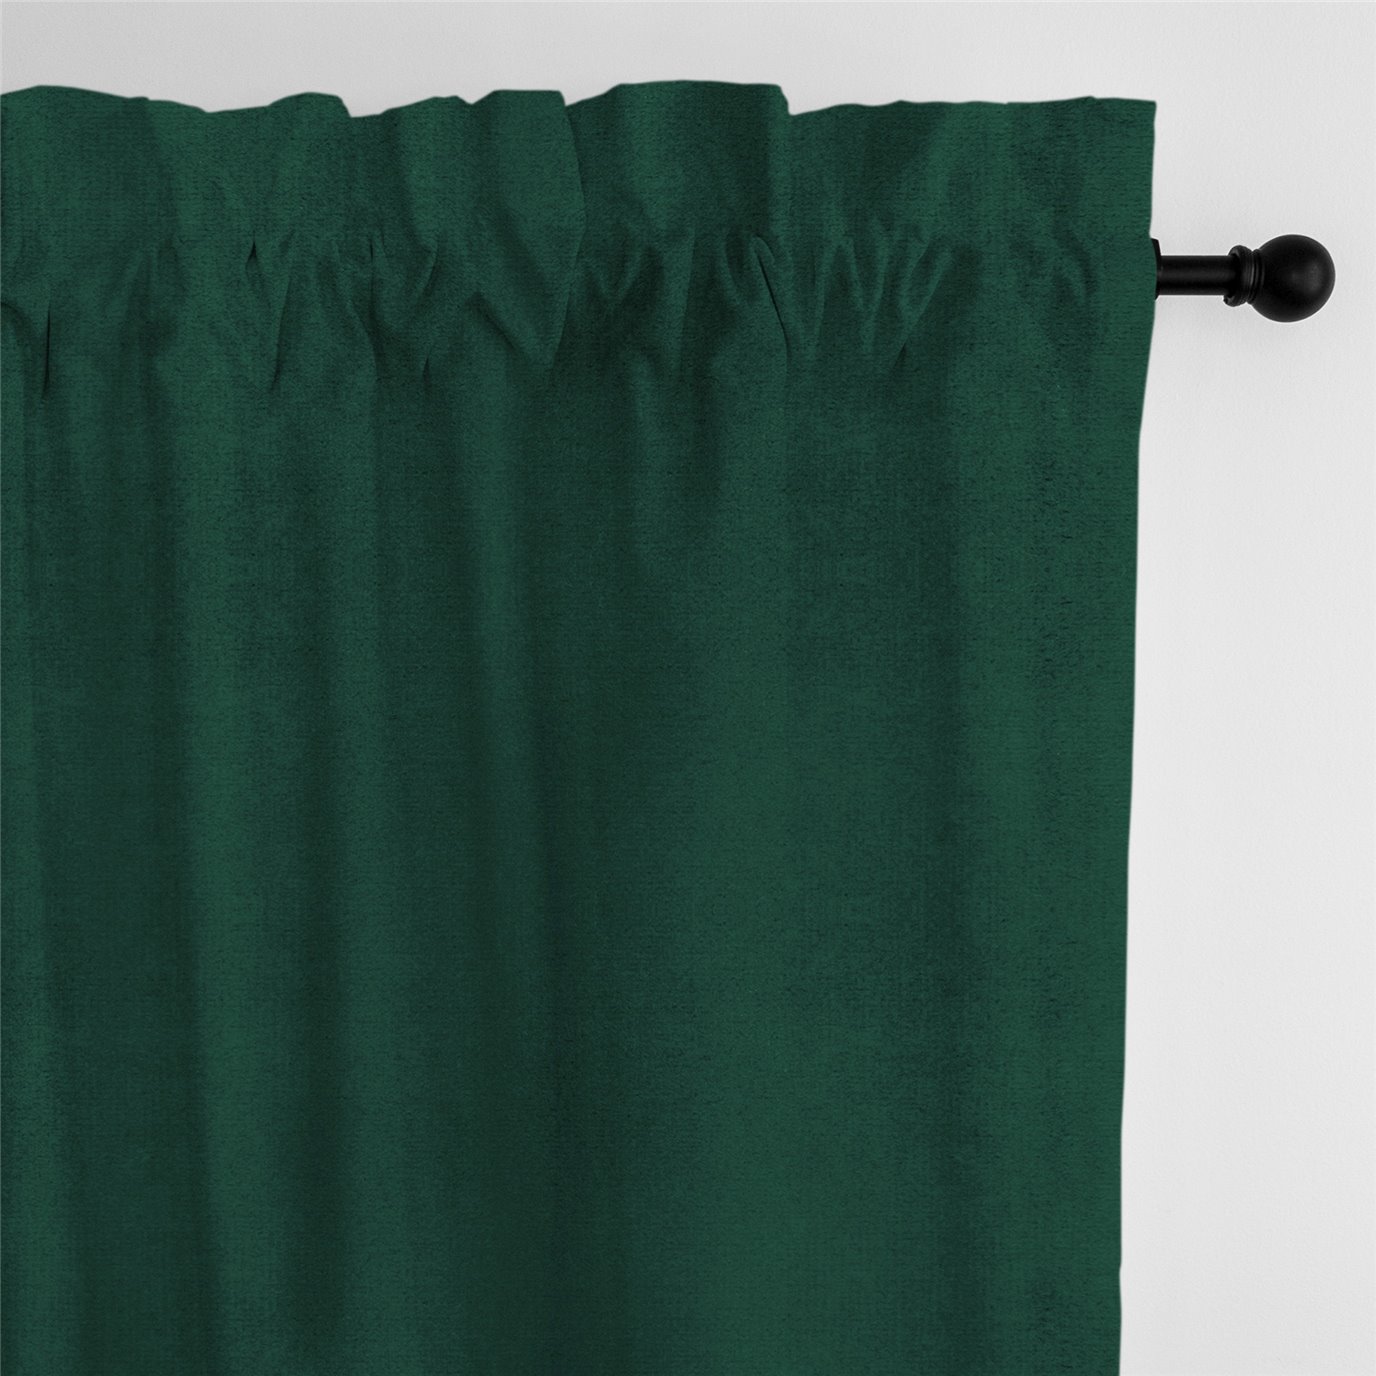 Vanessa Emerald Pole Top Drapery Panel - Pair - Size 50"x96"